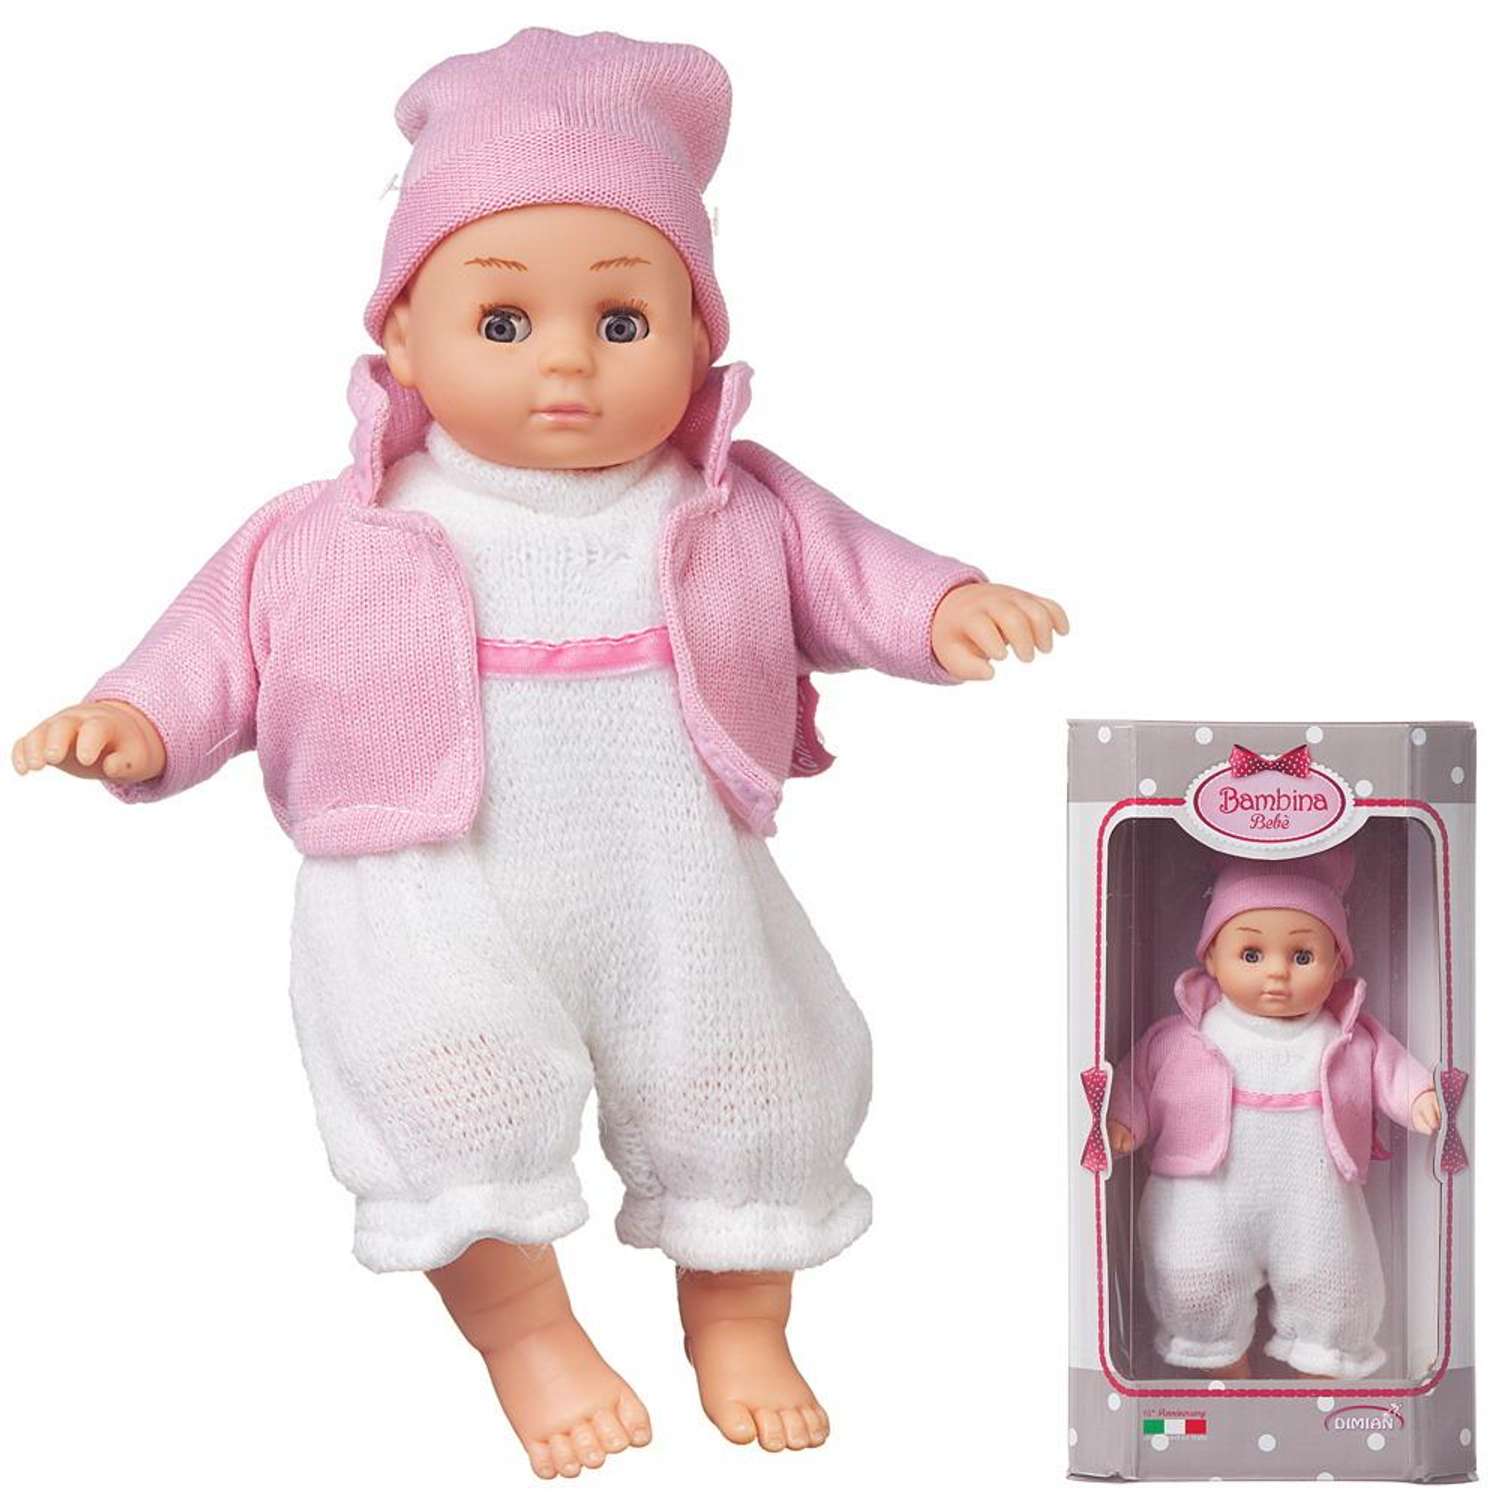 Кукла-пупс ABTOYS Bambina Bebe в вязаном белорозовом костюмчике 20 см BD1651-M37/w(6) - фото 1